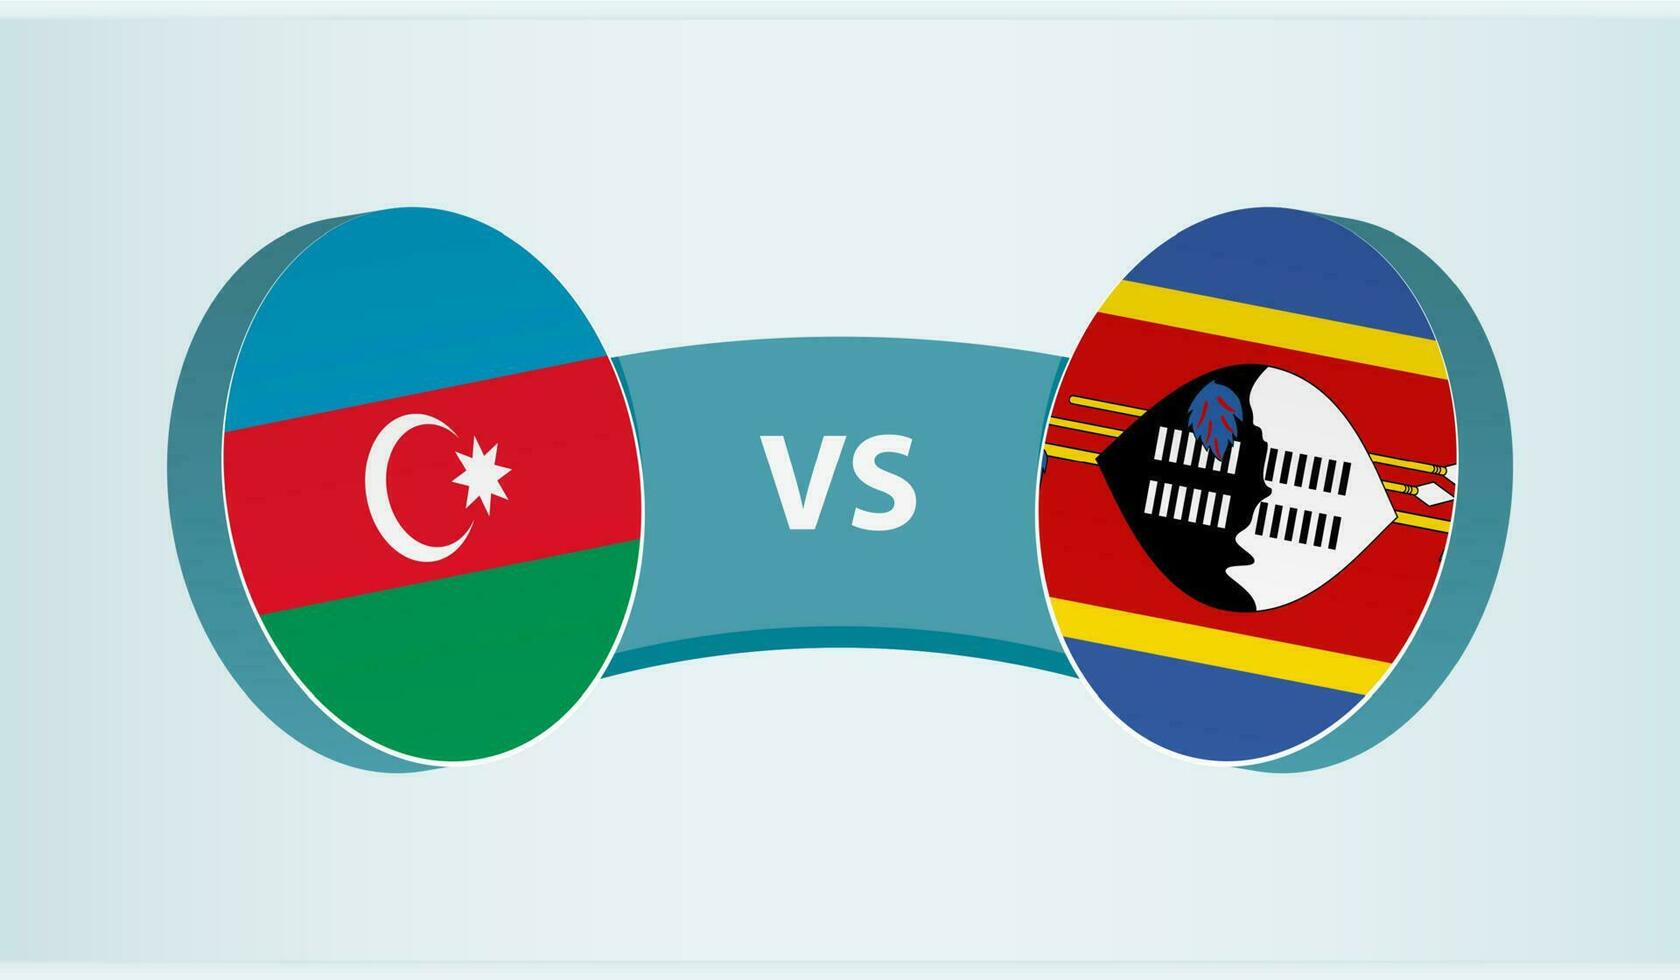 azerbaijan mot swaziland, team sporter konkurrens begrepp. vektor